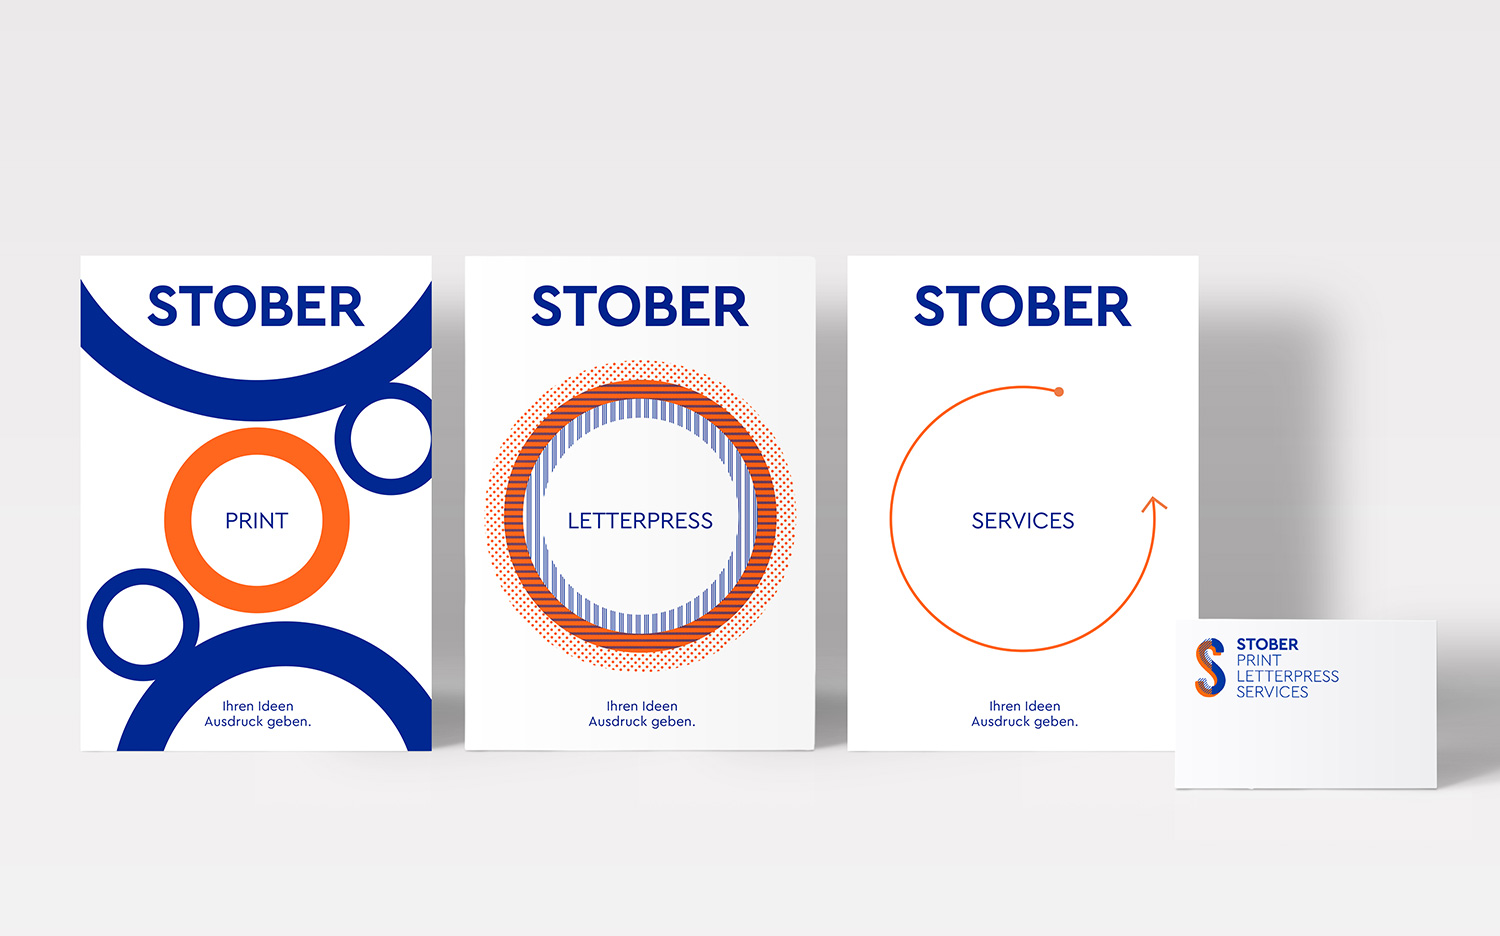 Stober. Print, Letterpress, Services.